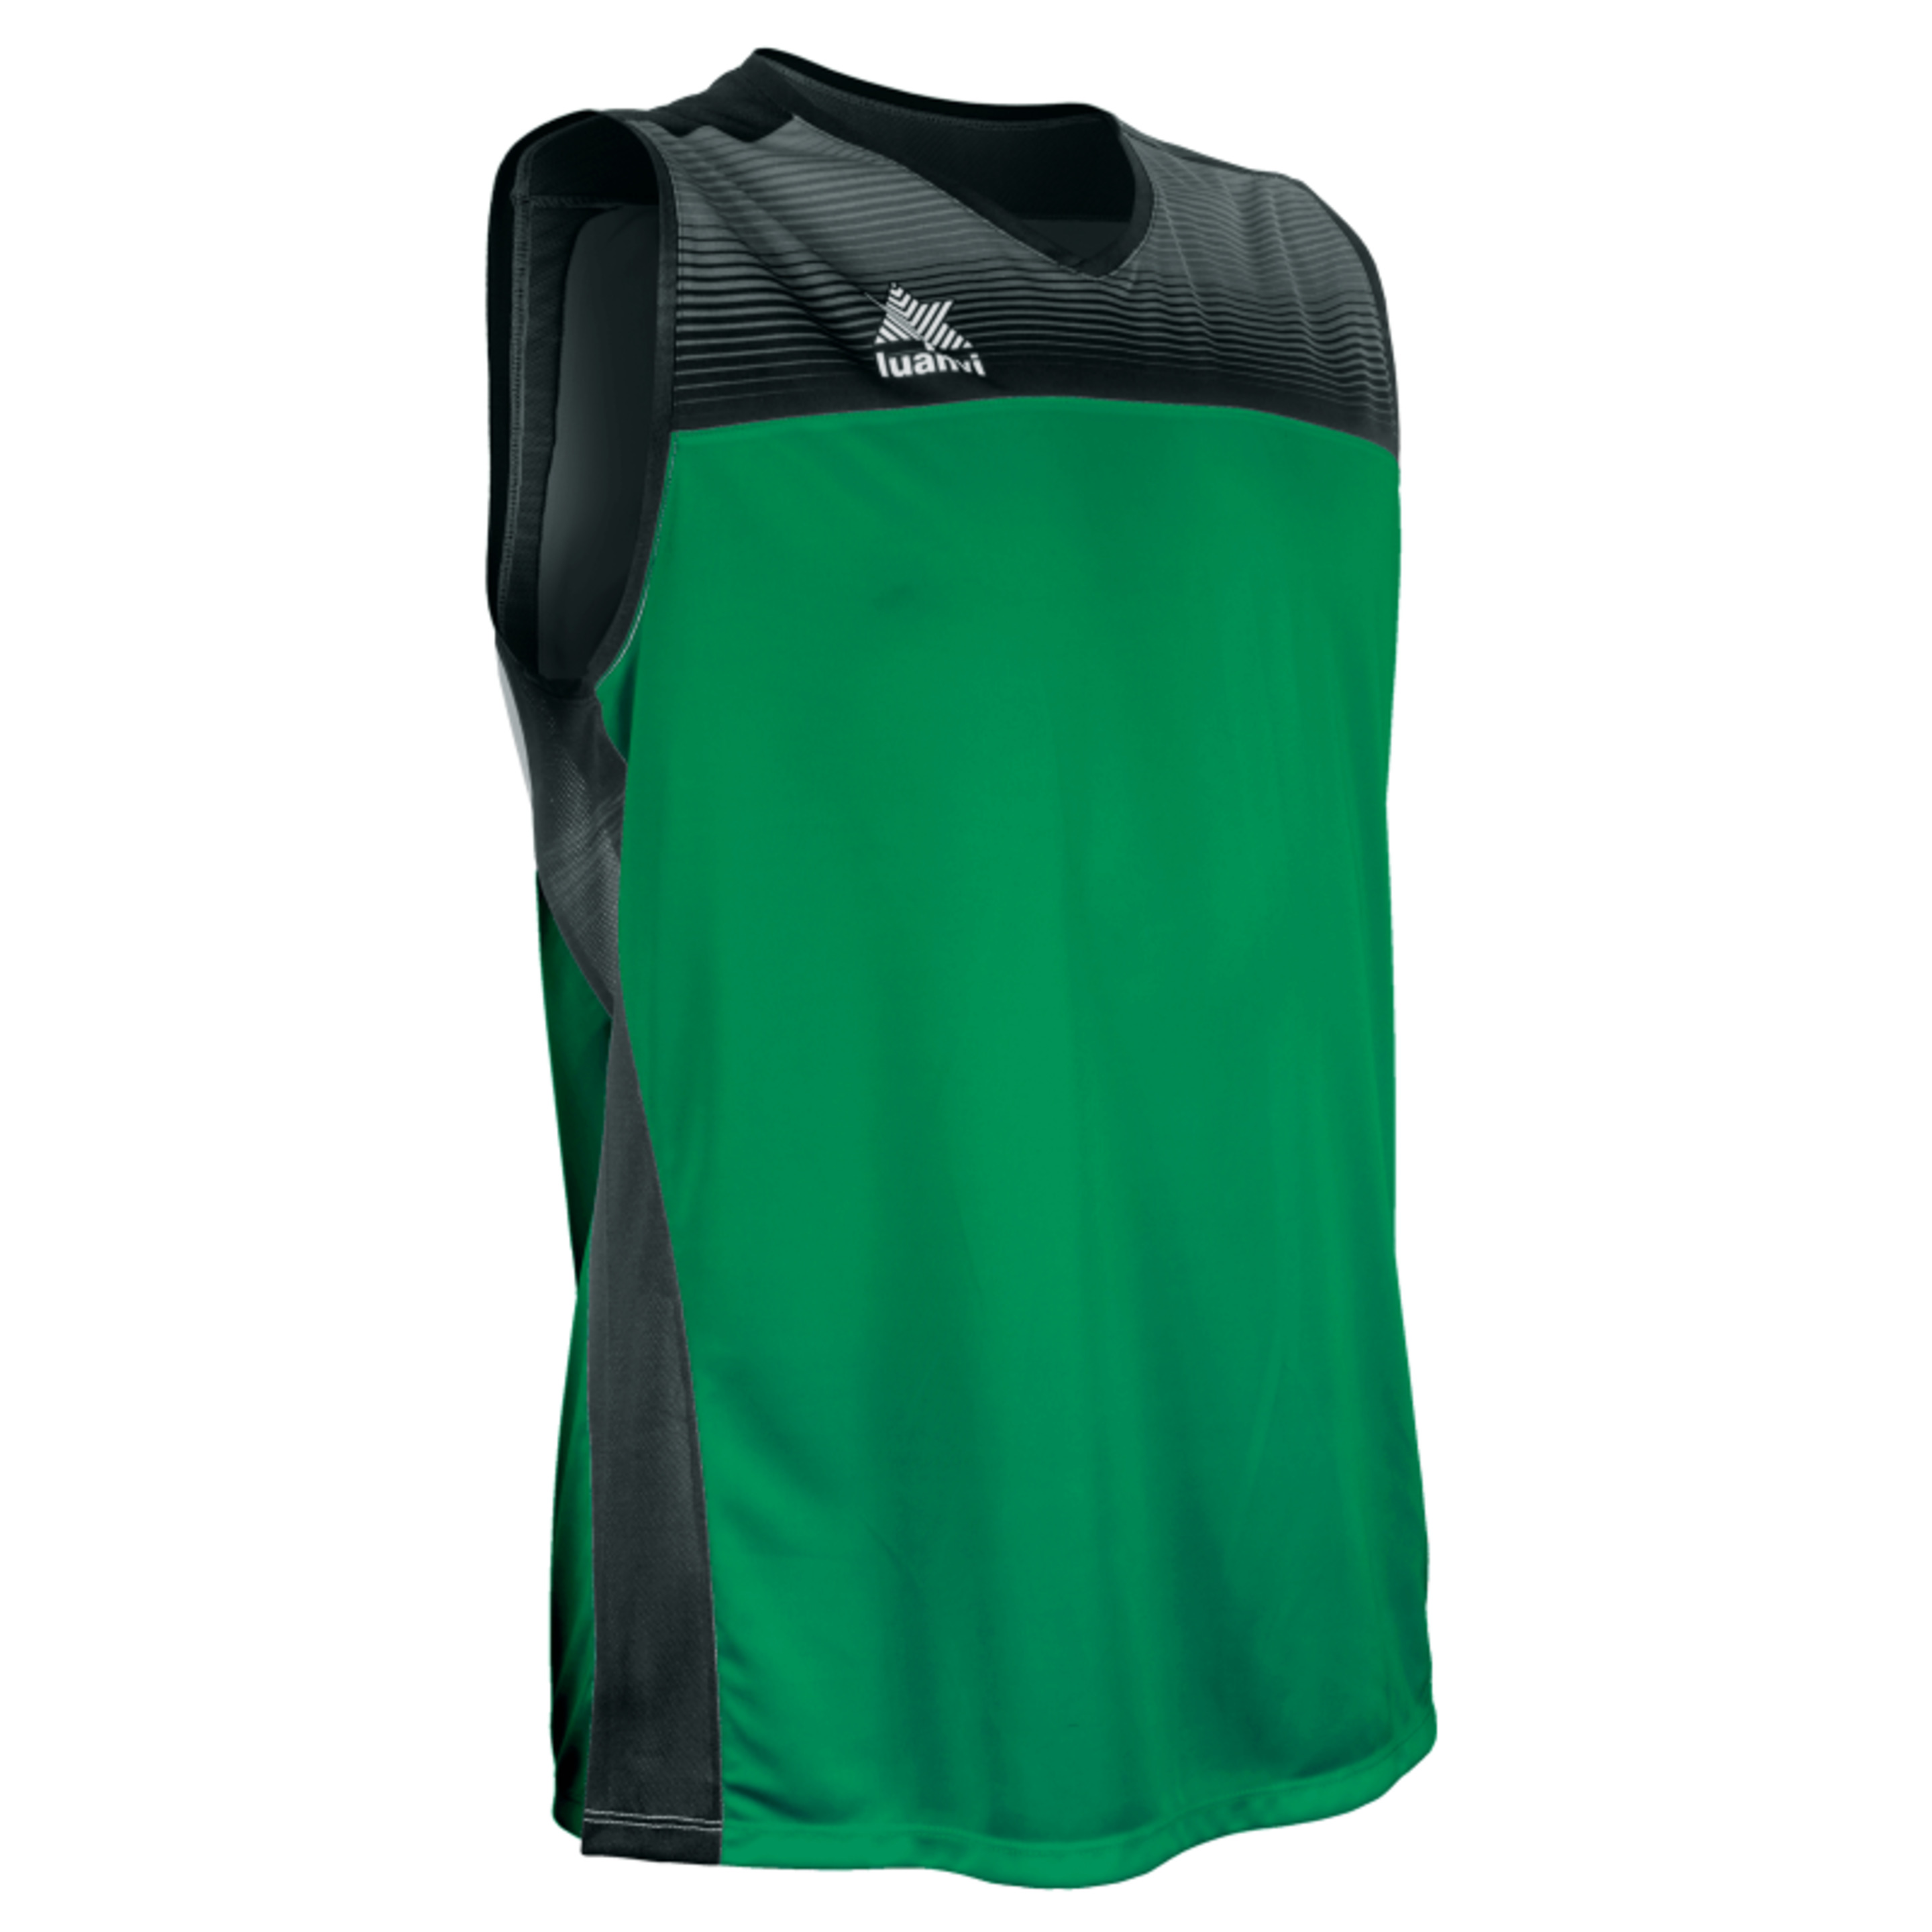 Camiseta Sin Mangas Basket Portland - verde-negro - 